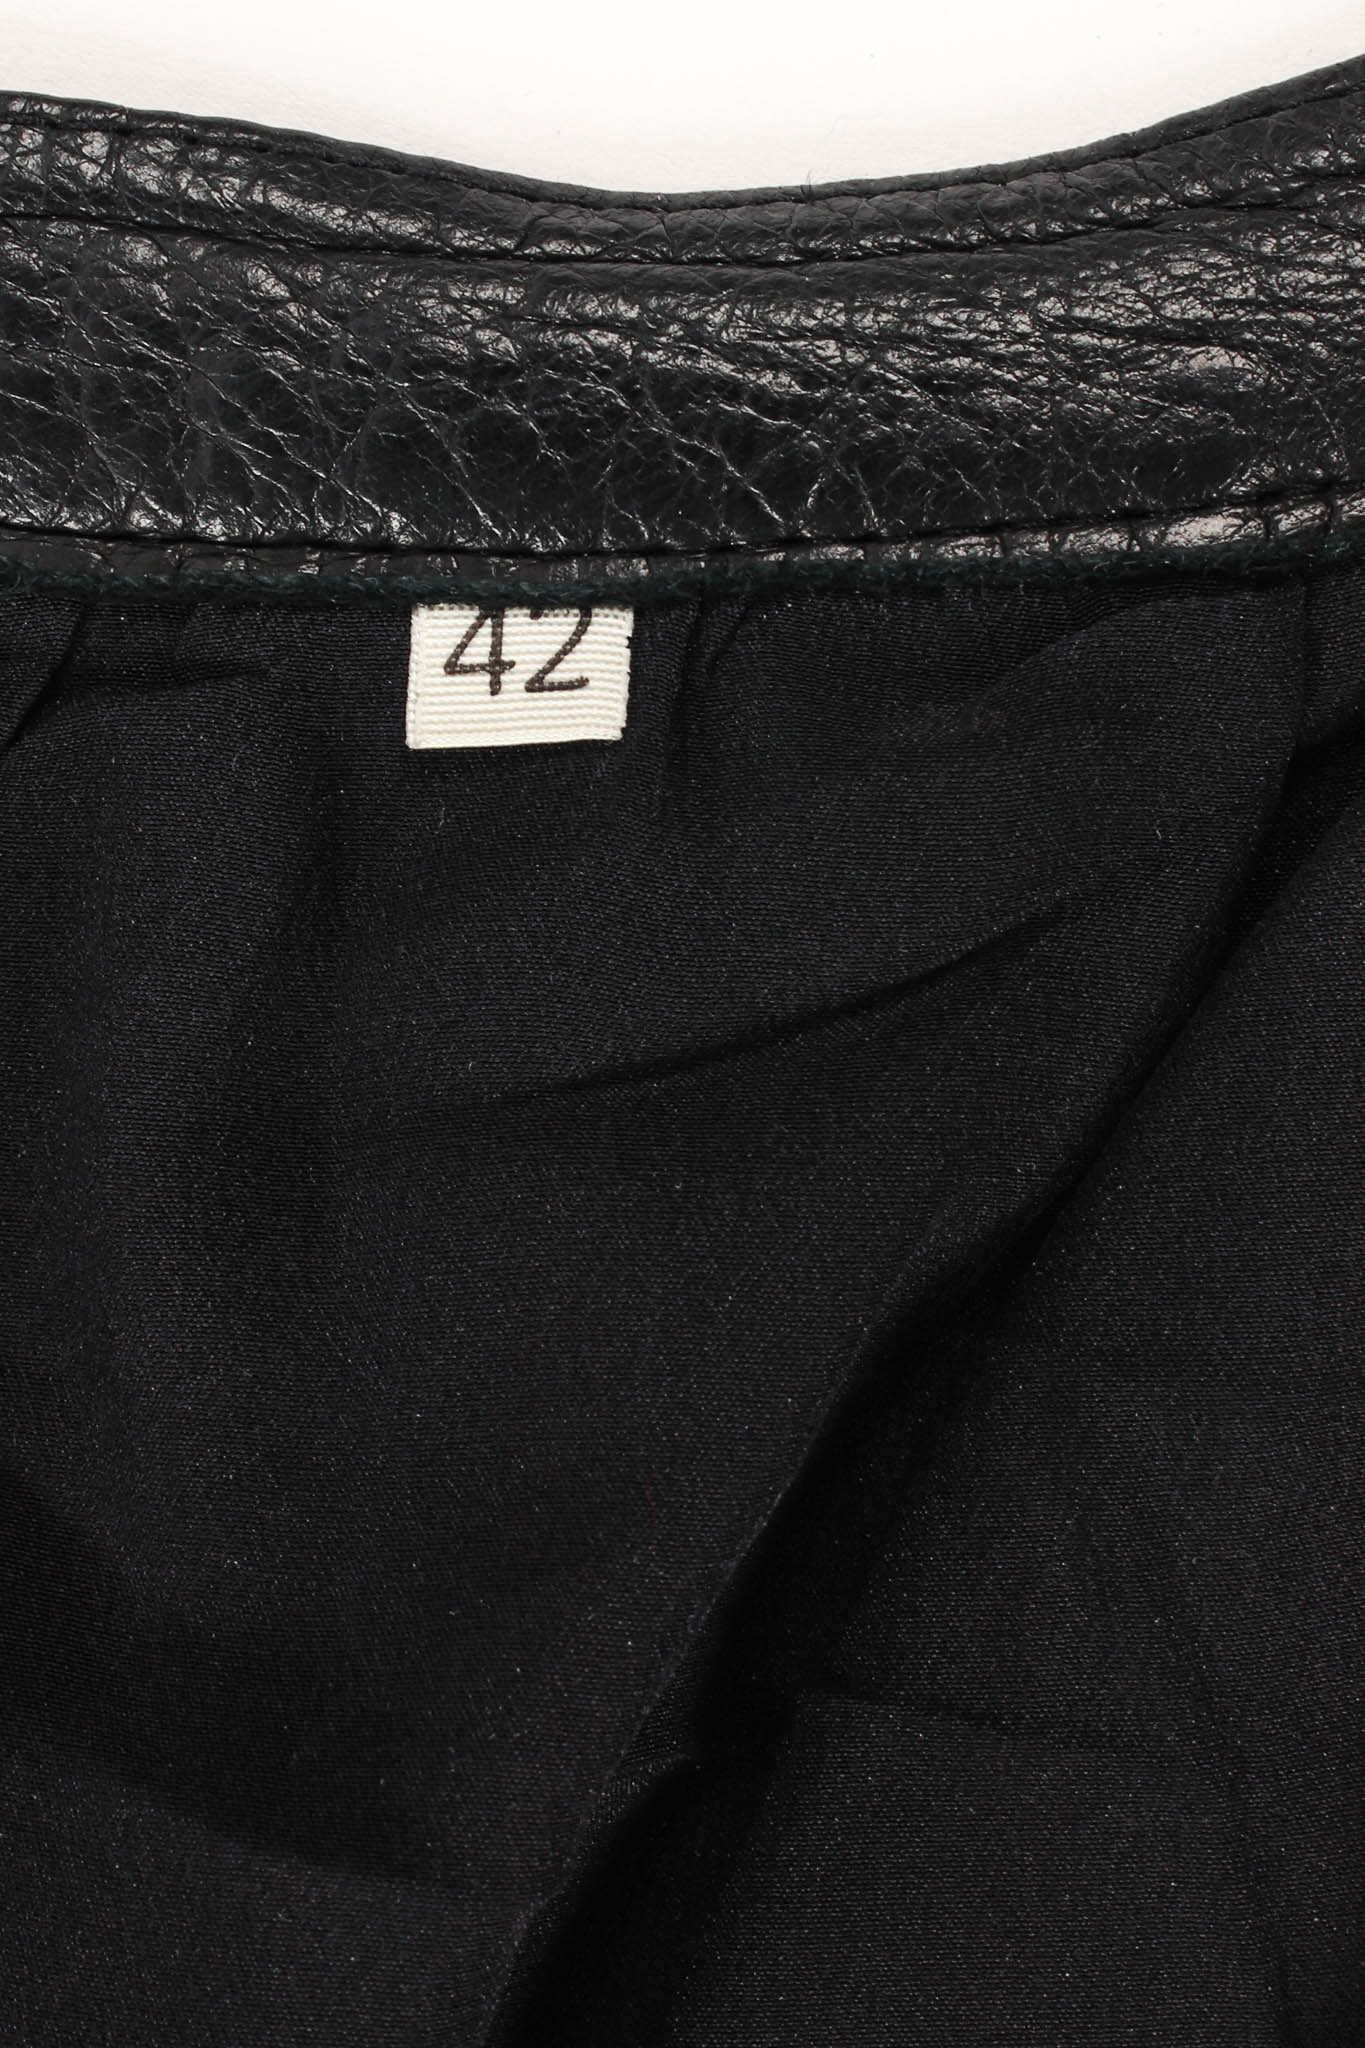 Vintage Valentino 1985 A/W Leather Fleur Beaded Top & Skirt Set size tag @ Recess LA